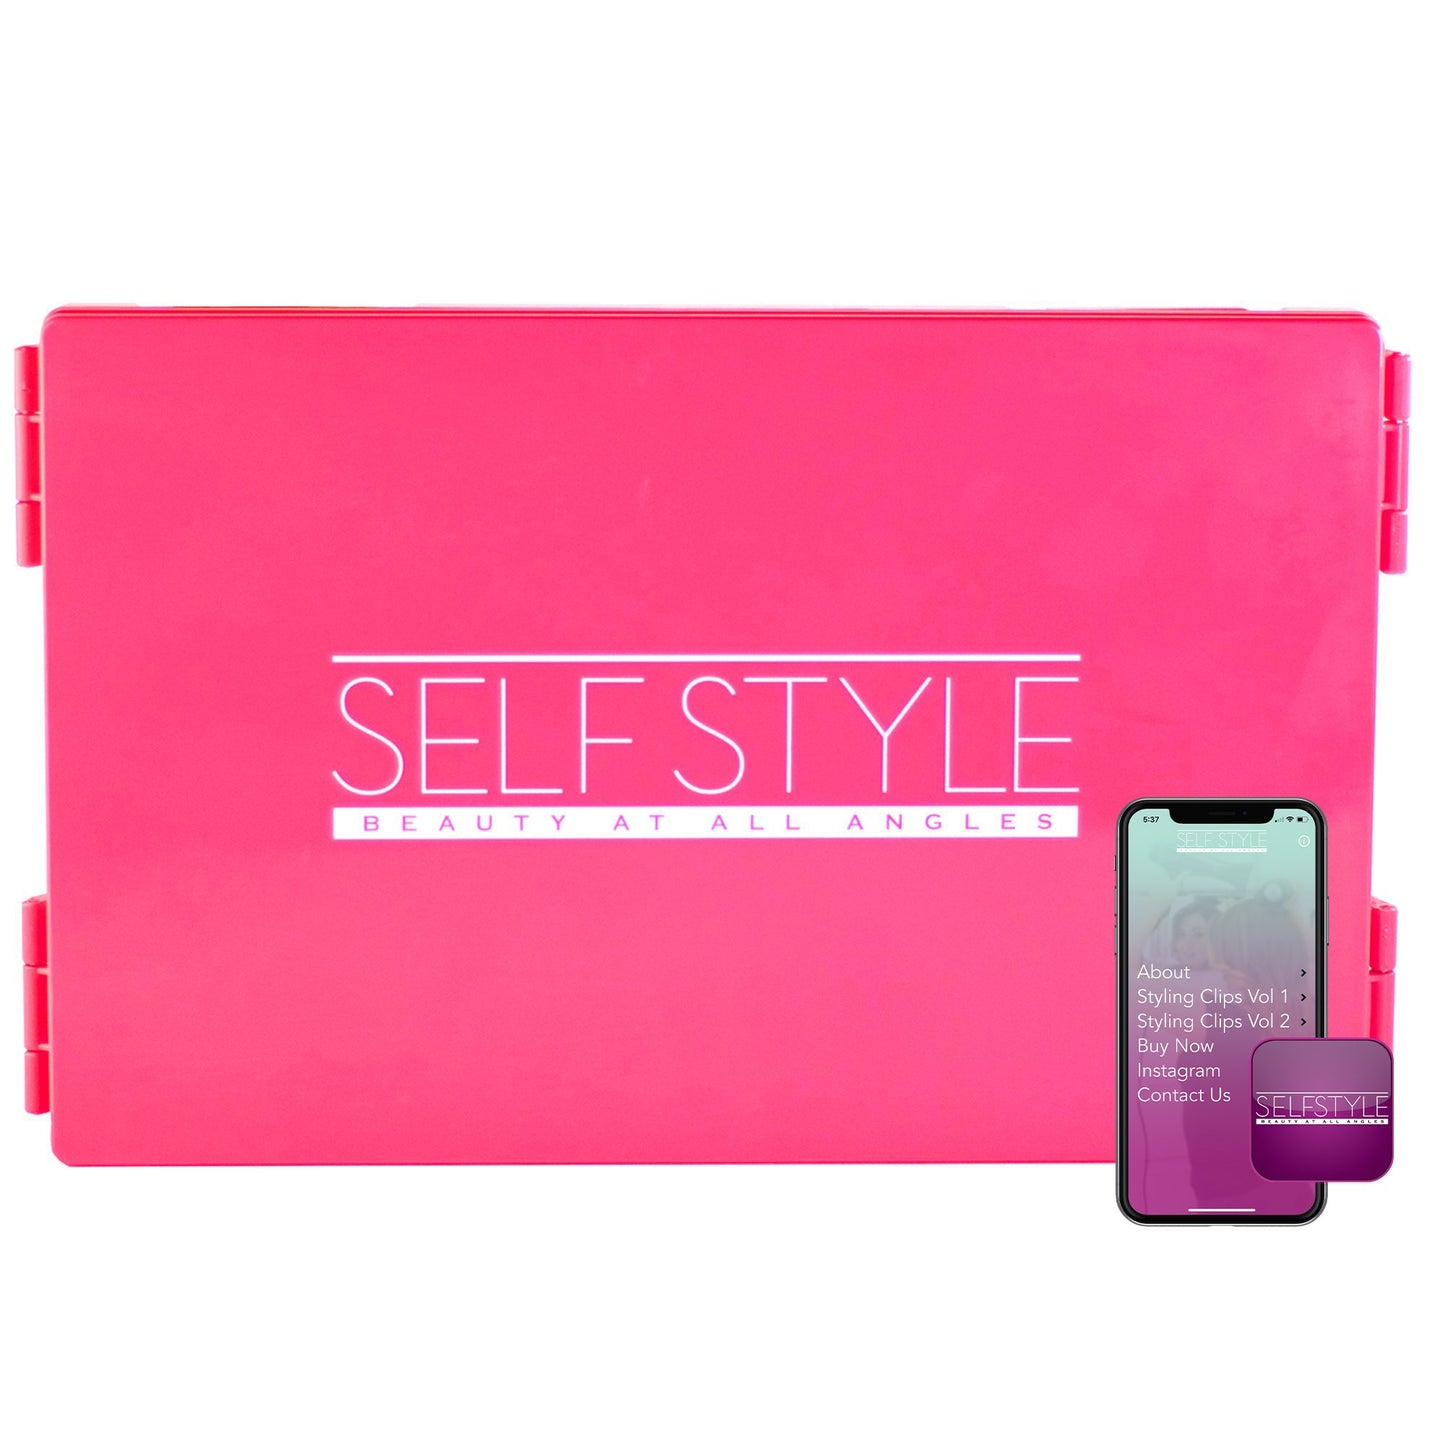 Self Style Travel Version - Pink